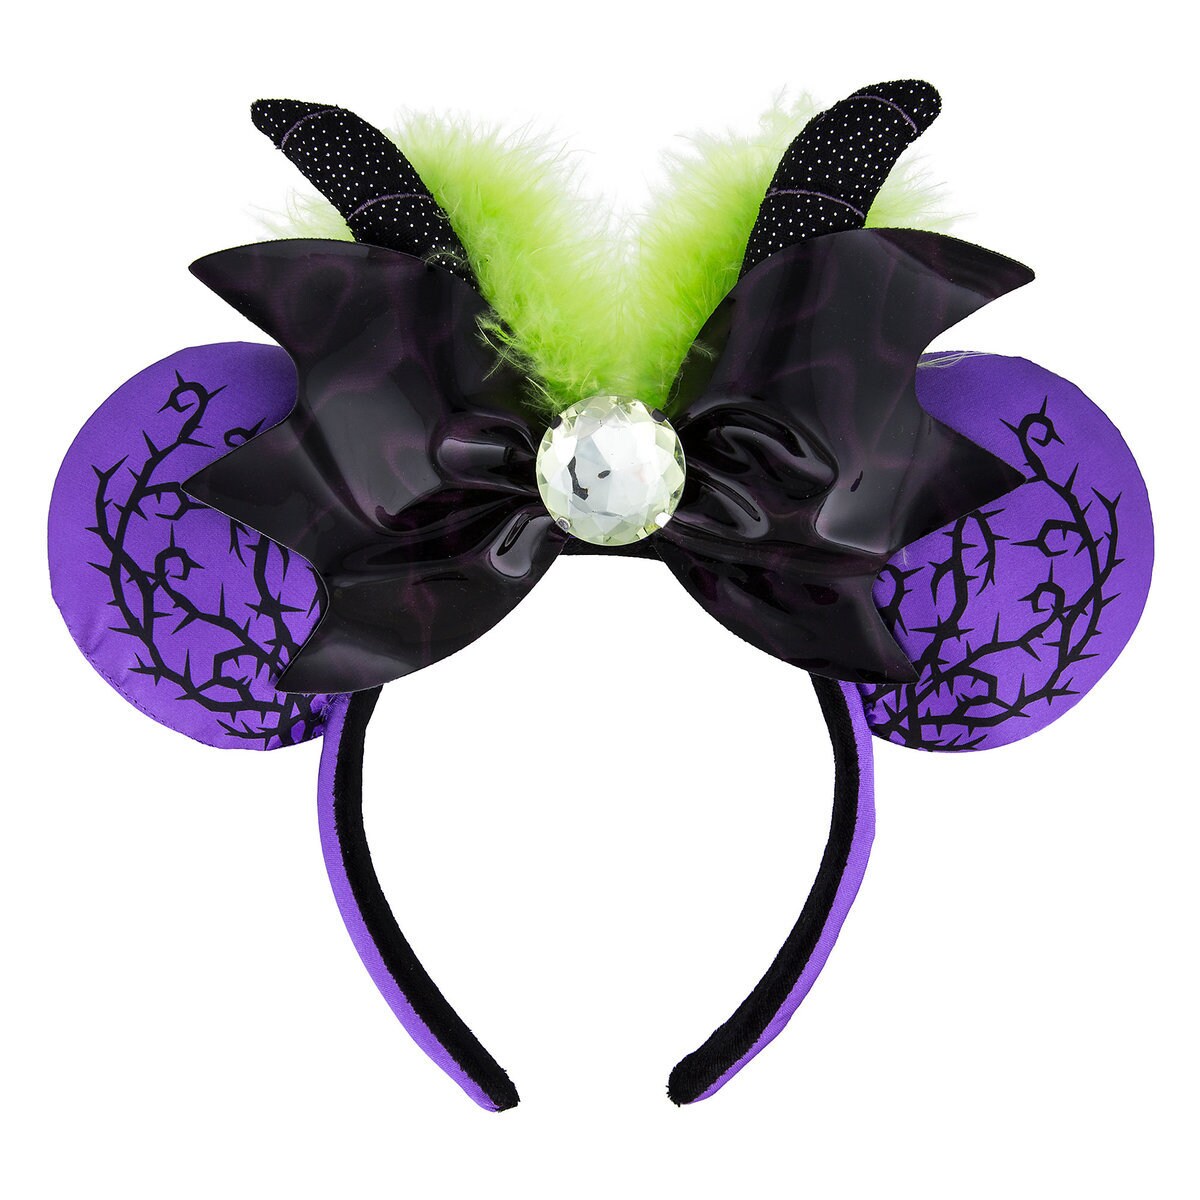 Product Image of Maleficent Ear Headband - Sleeping Beauty # 1